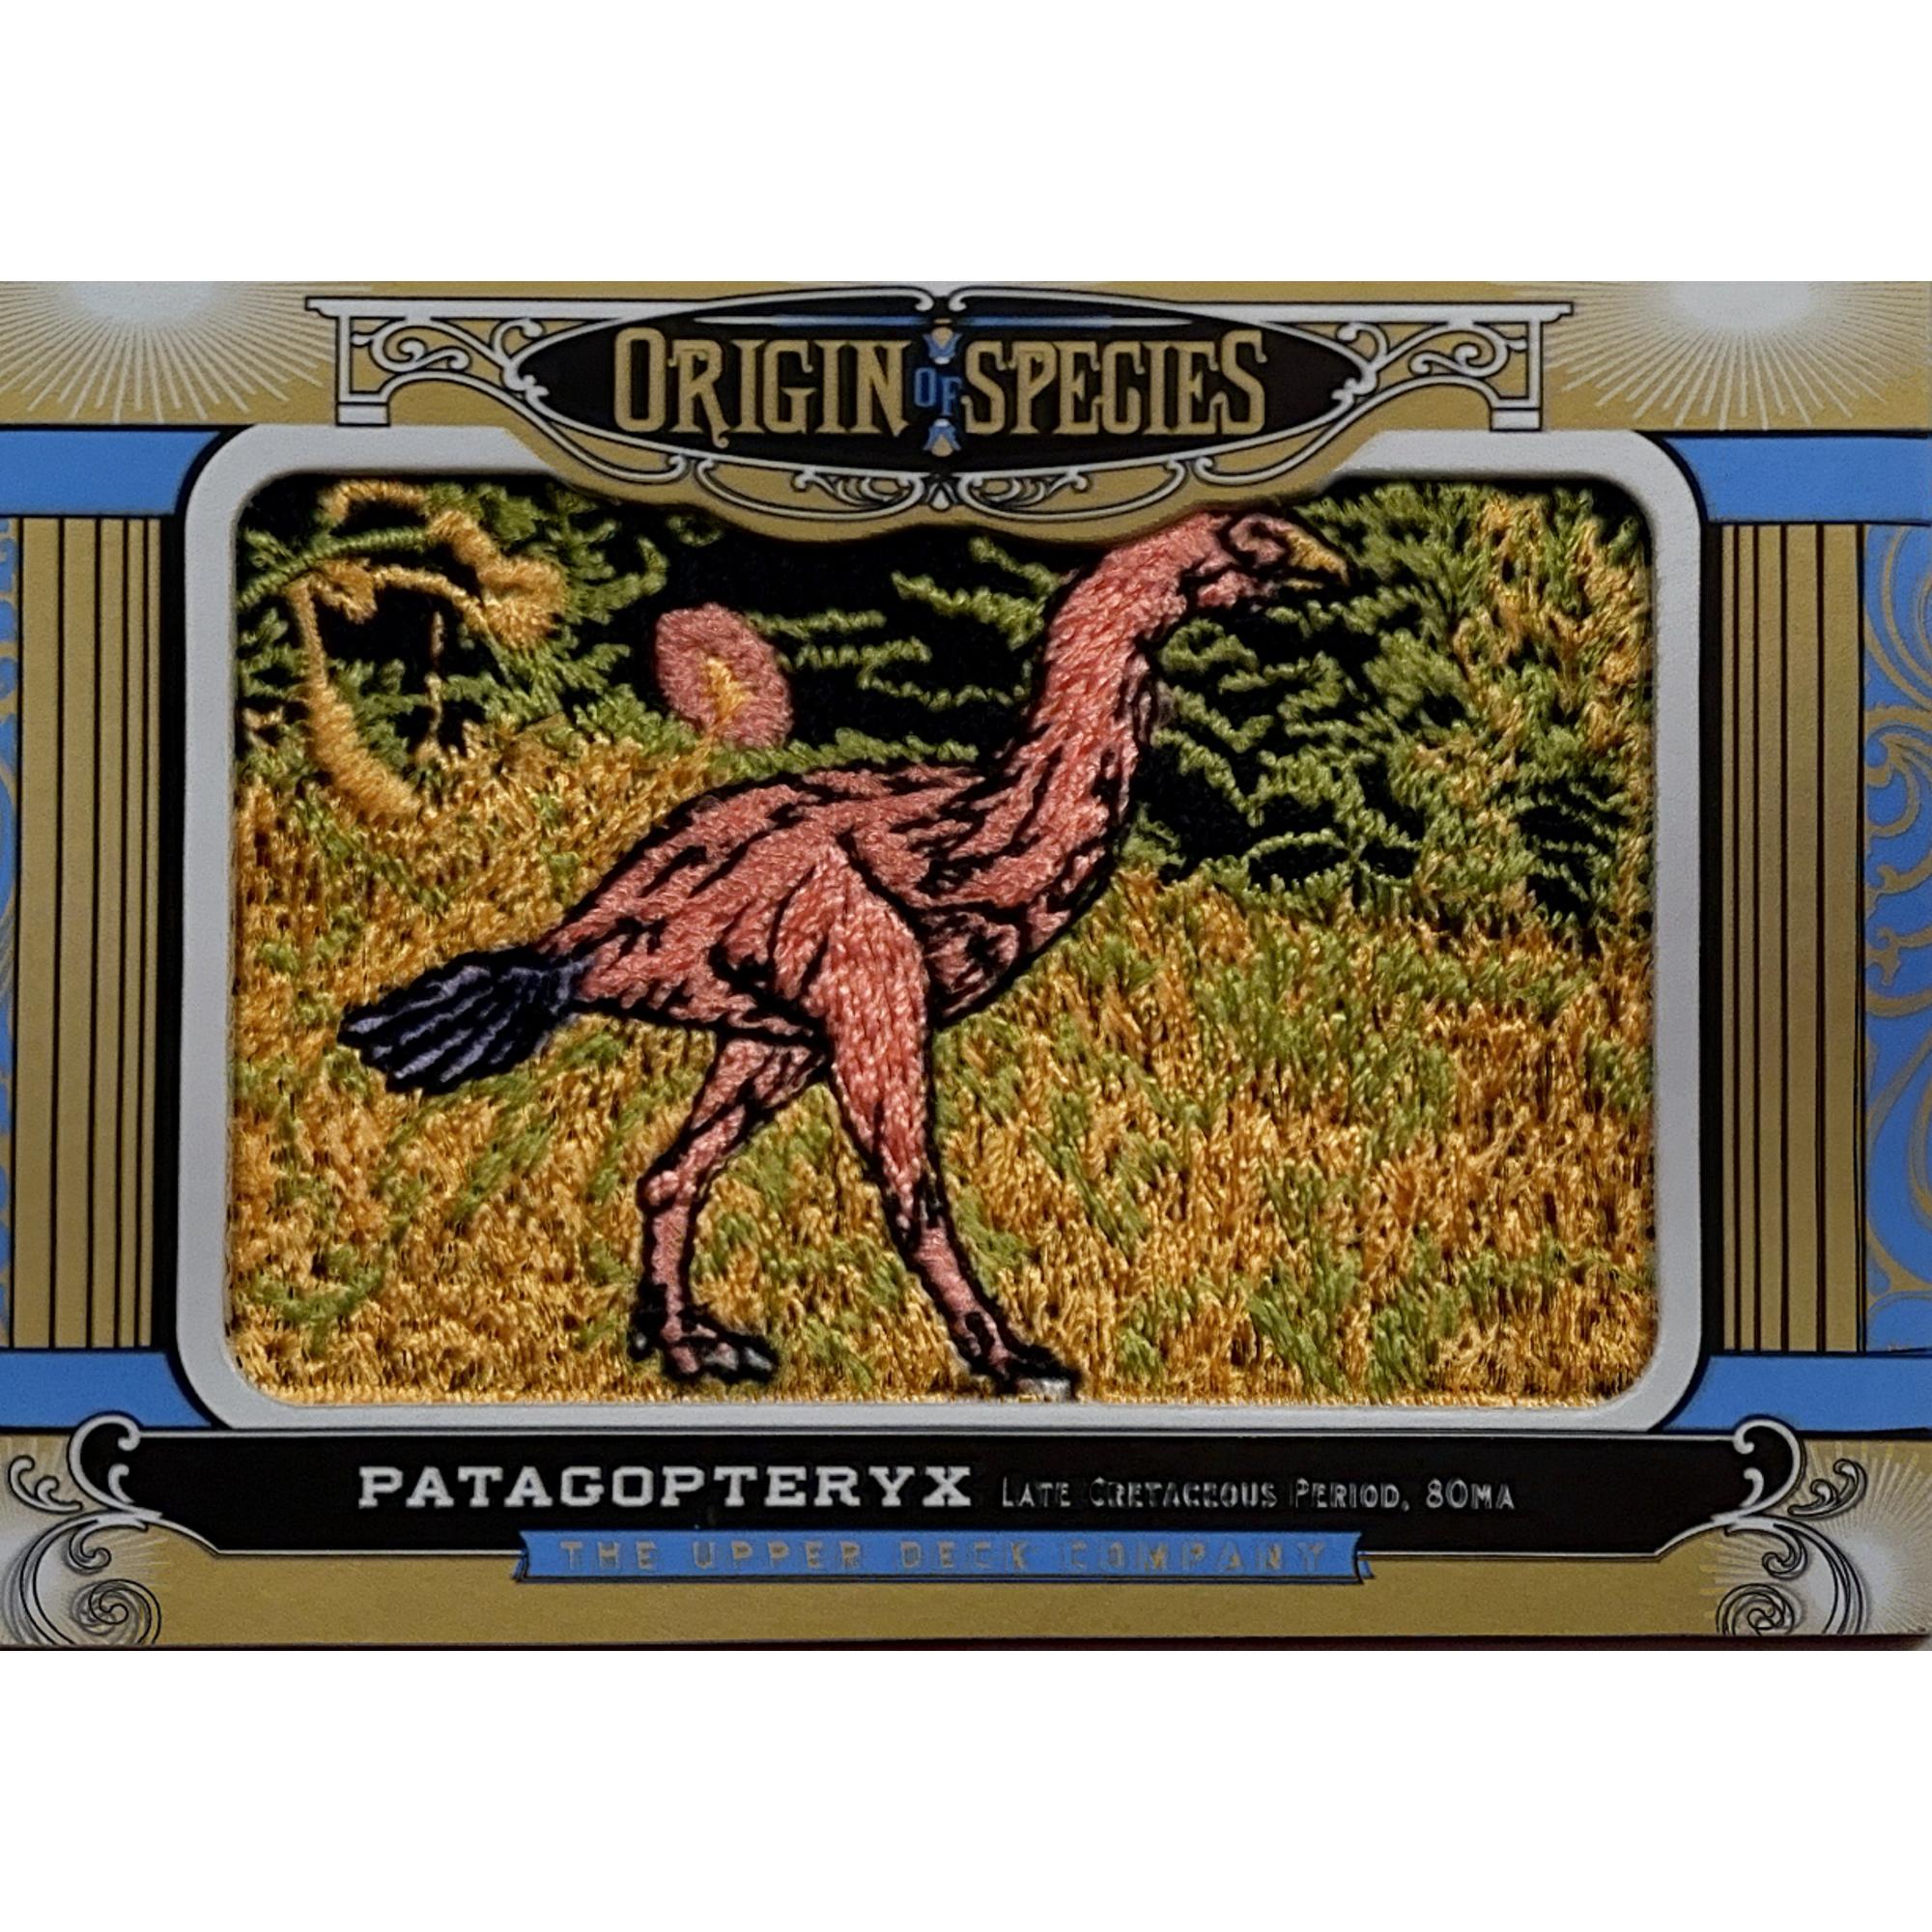 Upper deck, Patagopteryx patch Prehistoric Online